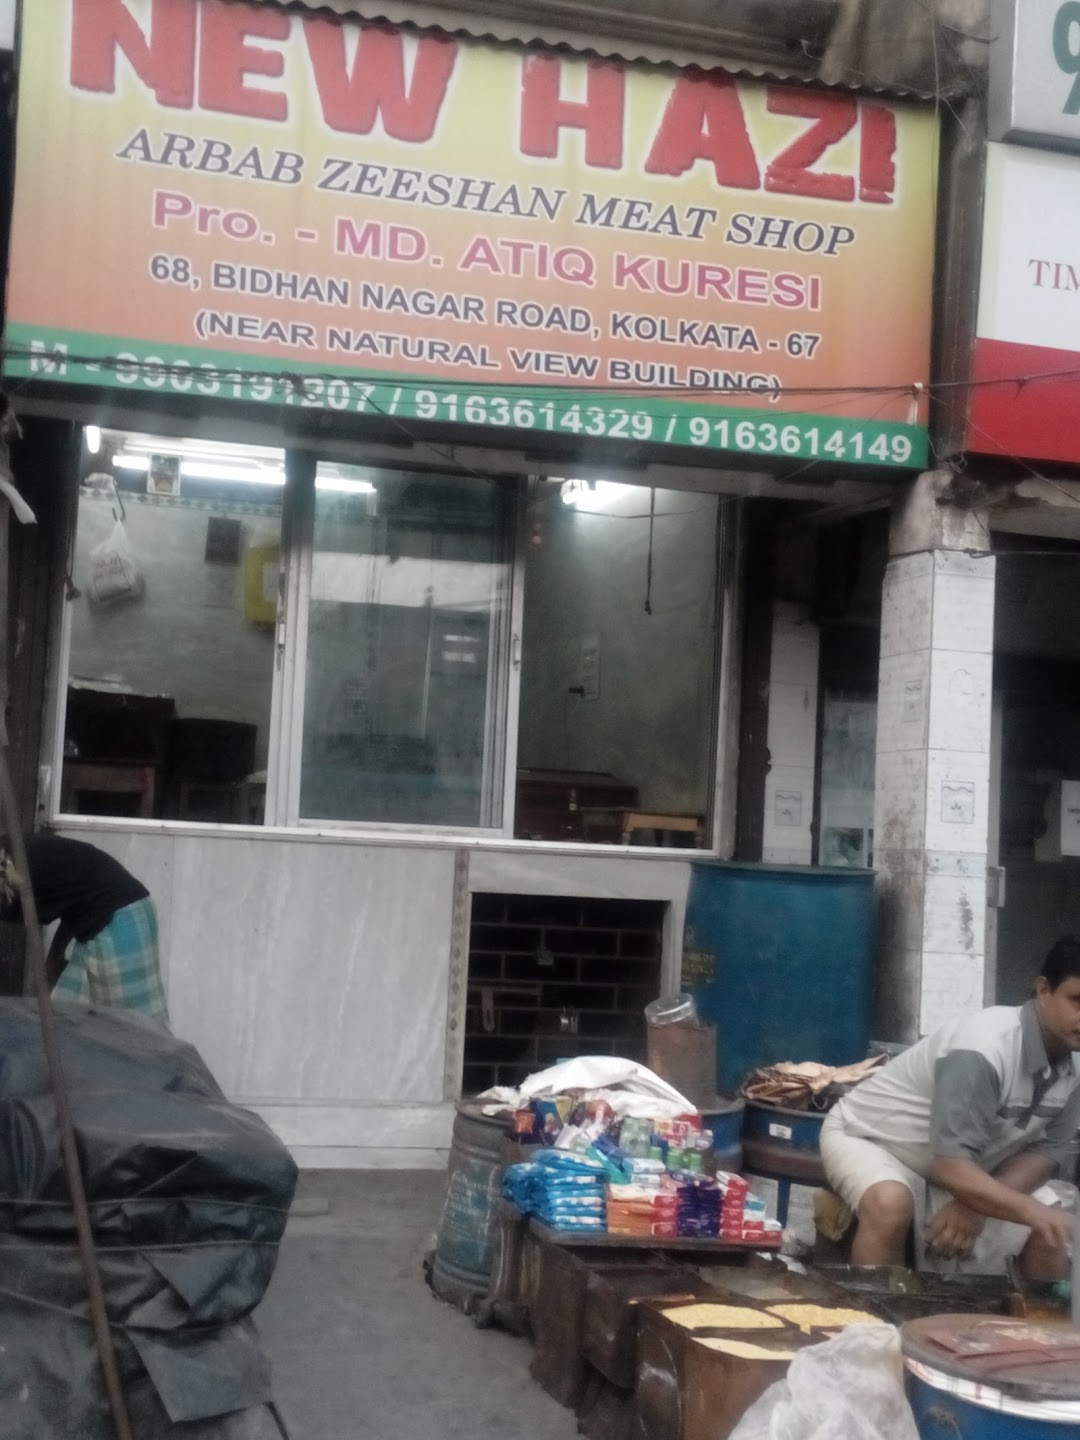 New Hazi Arbab Zeeshan Meat Shop